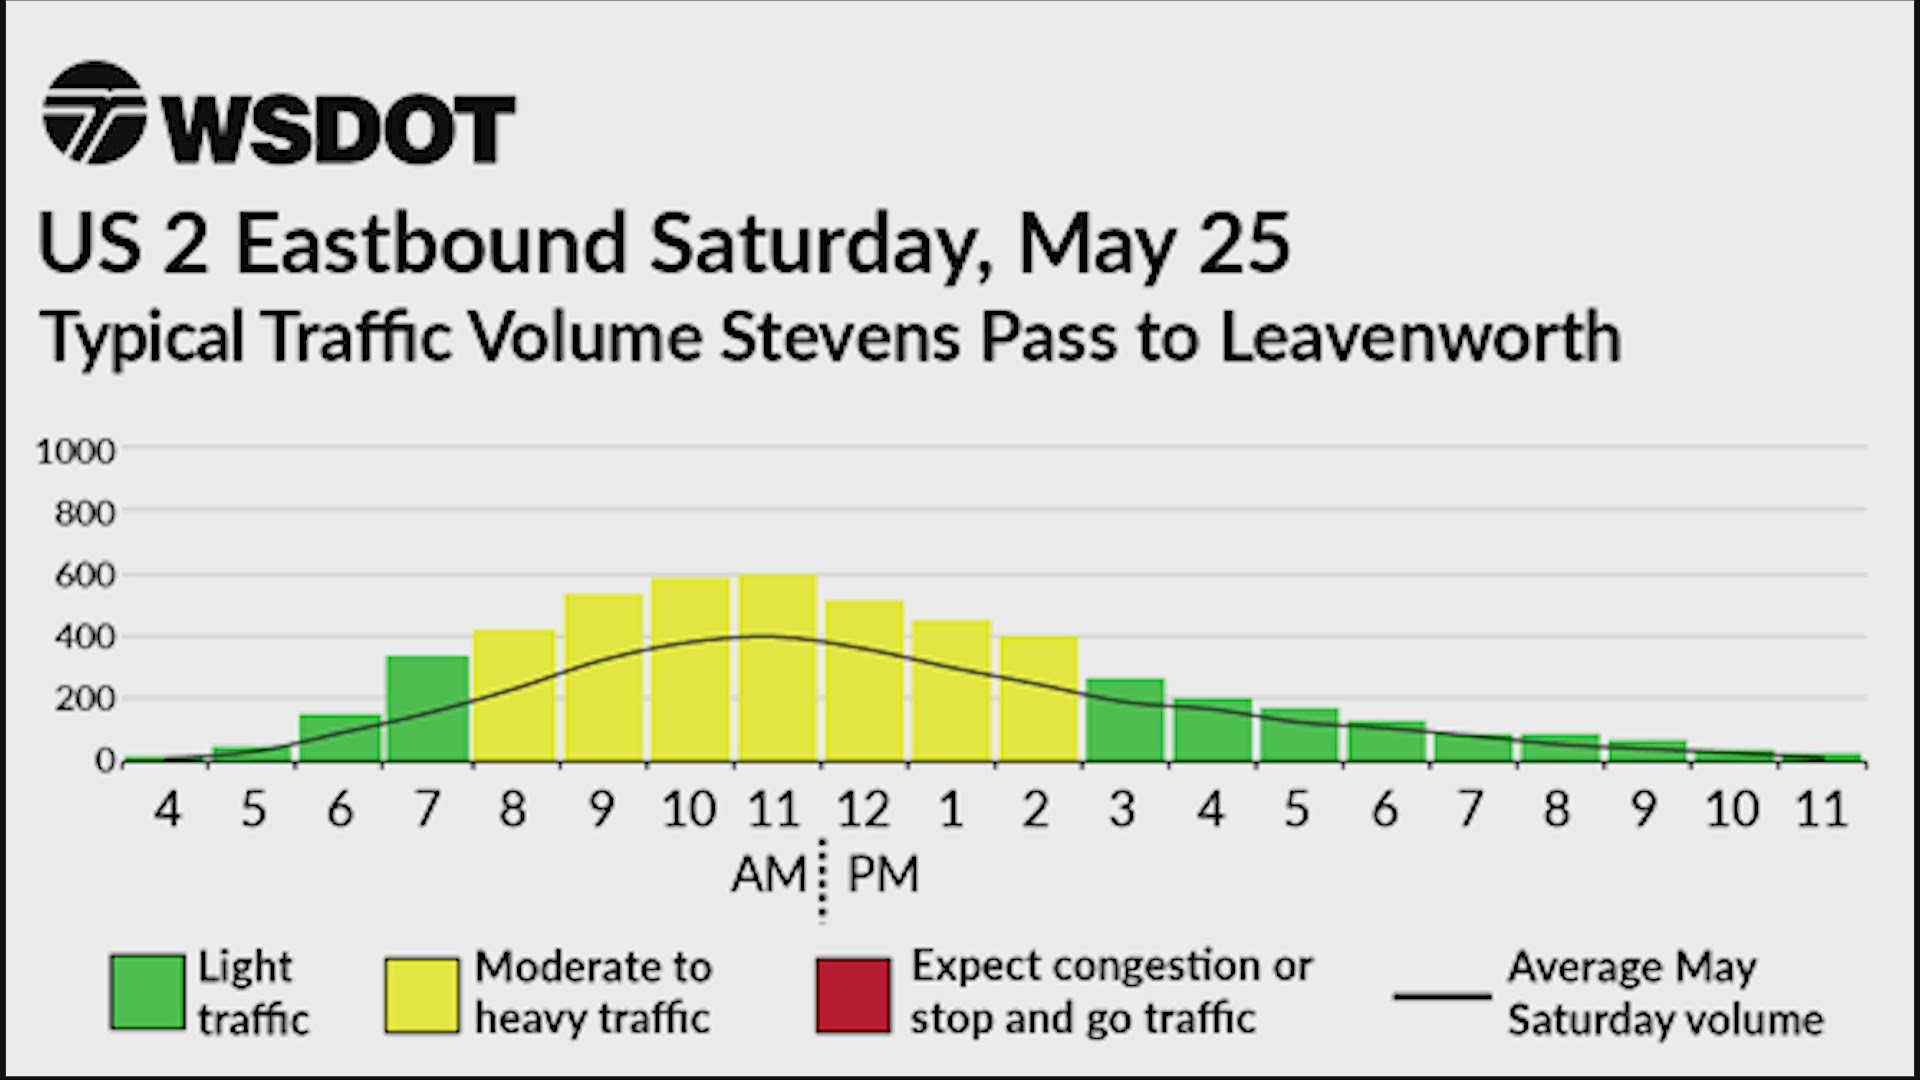 WSDOT's estimated drive times around Washington for Saturday, May 25th.